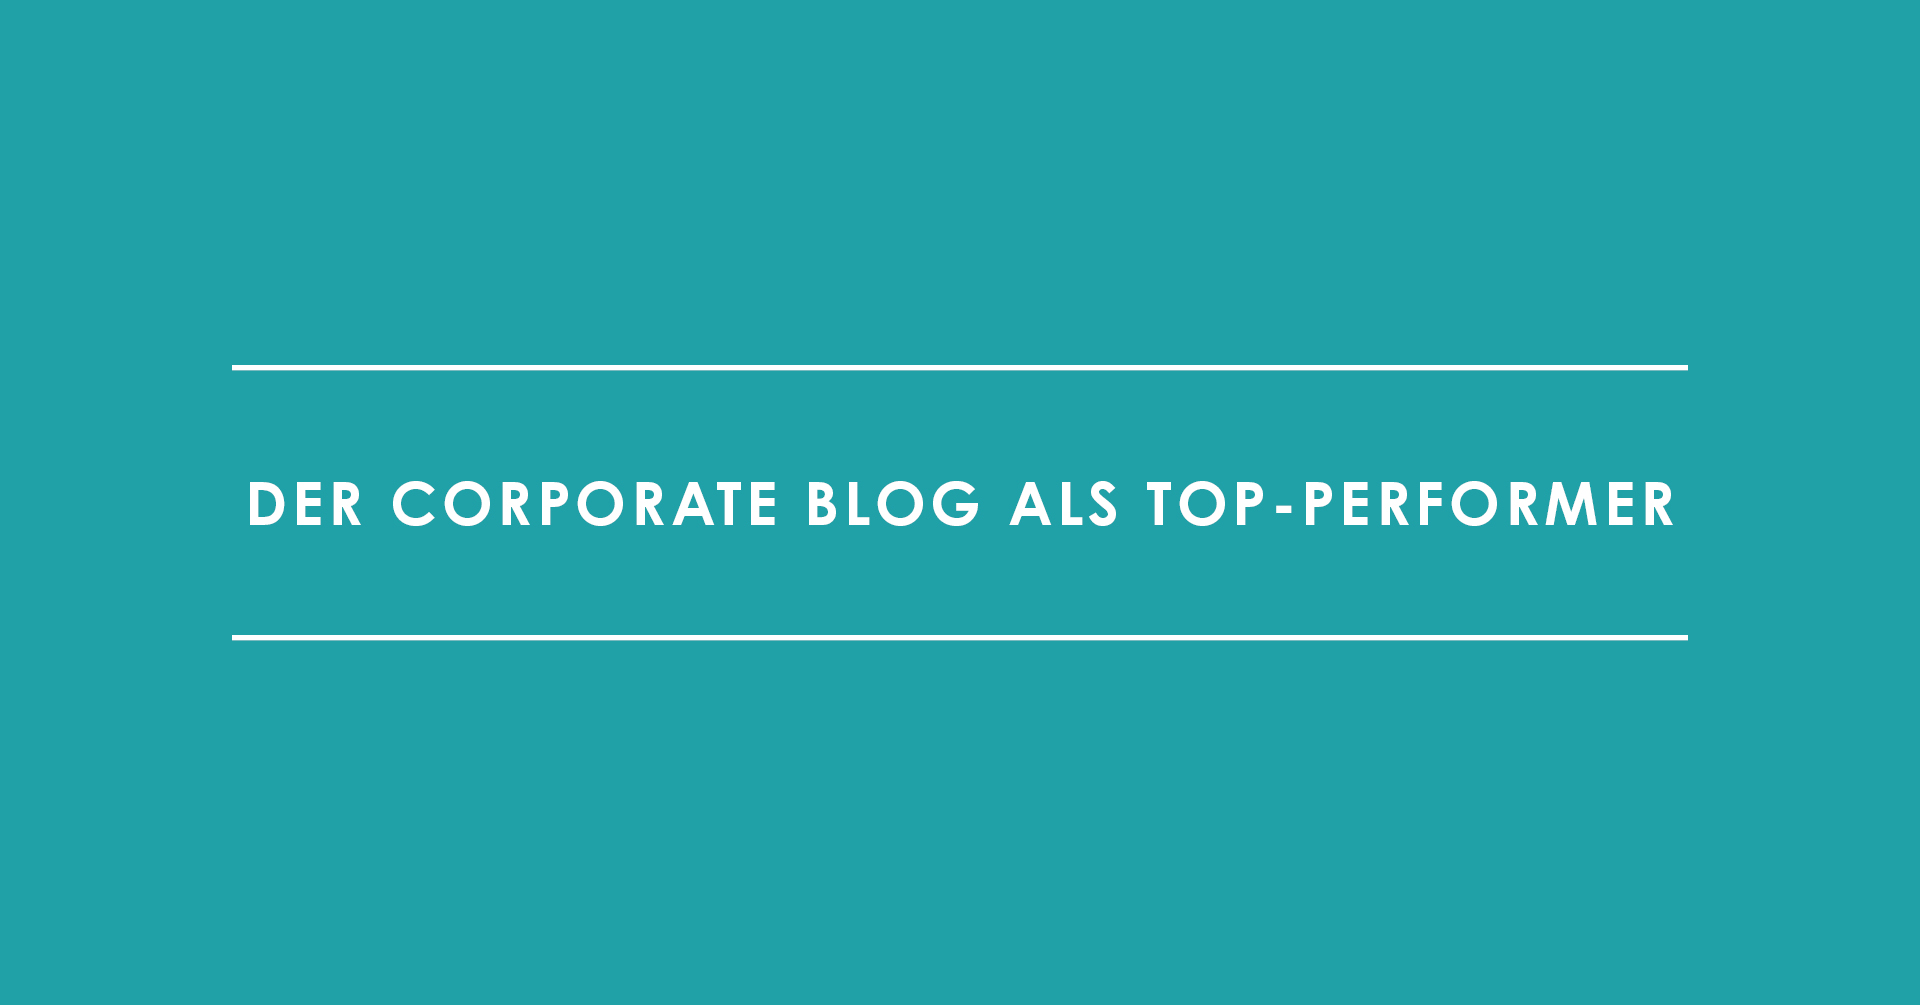 Der Corporate Blog als Top-Performer